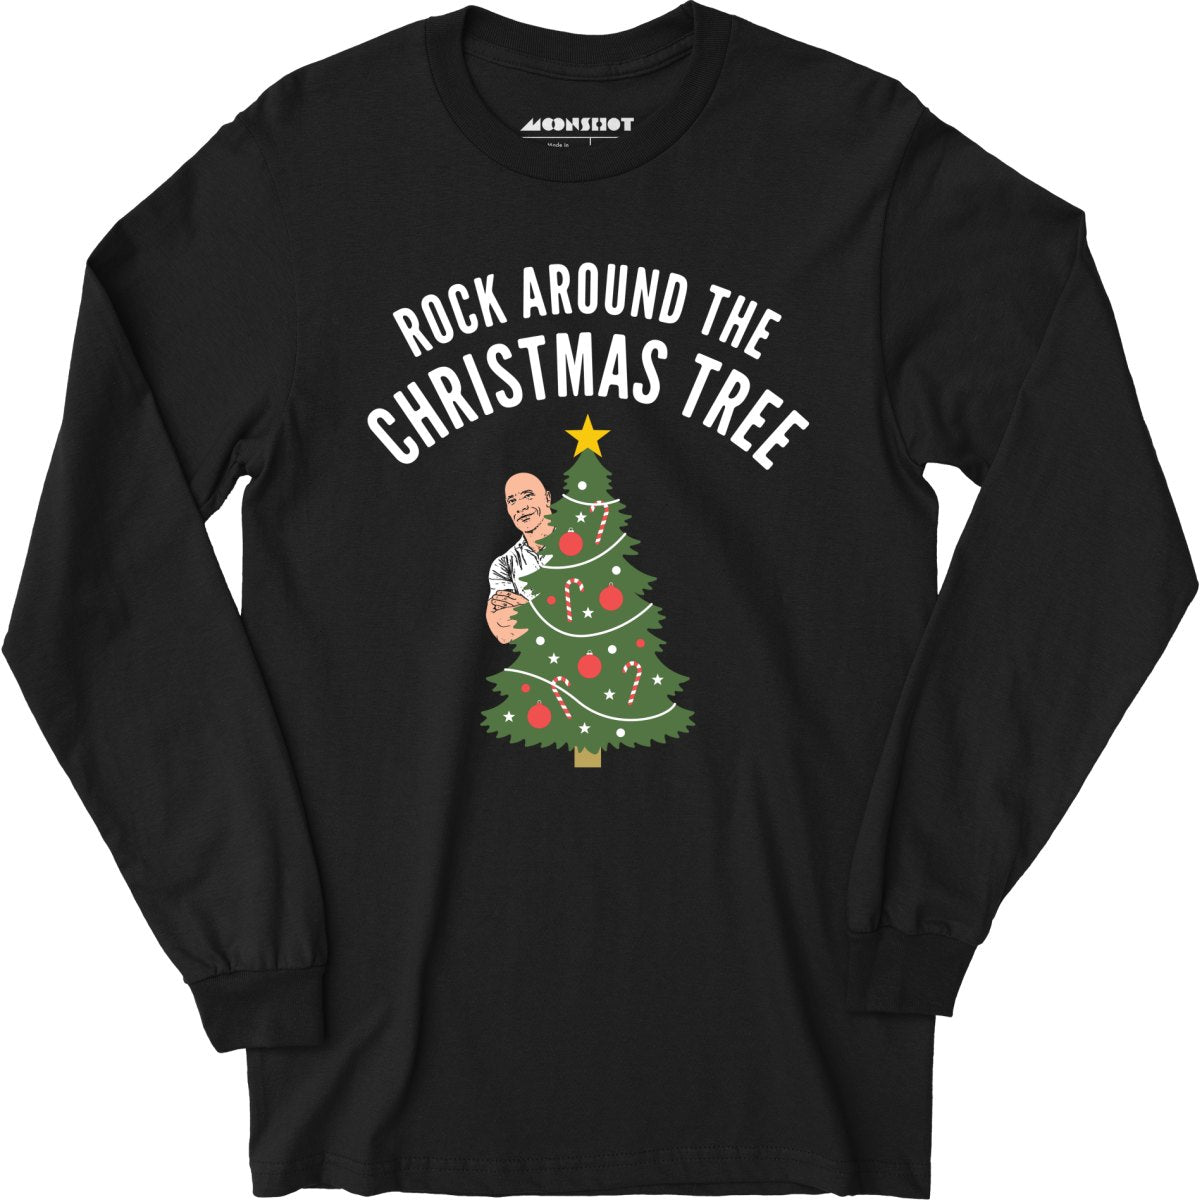 Rock Around the Christmas Tree - Long Sleeve T-Shirt